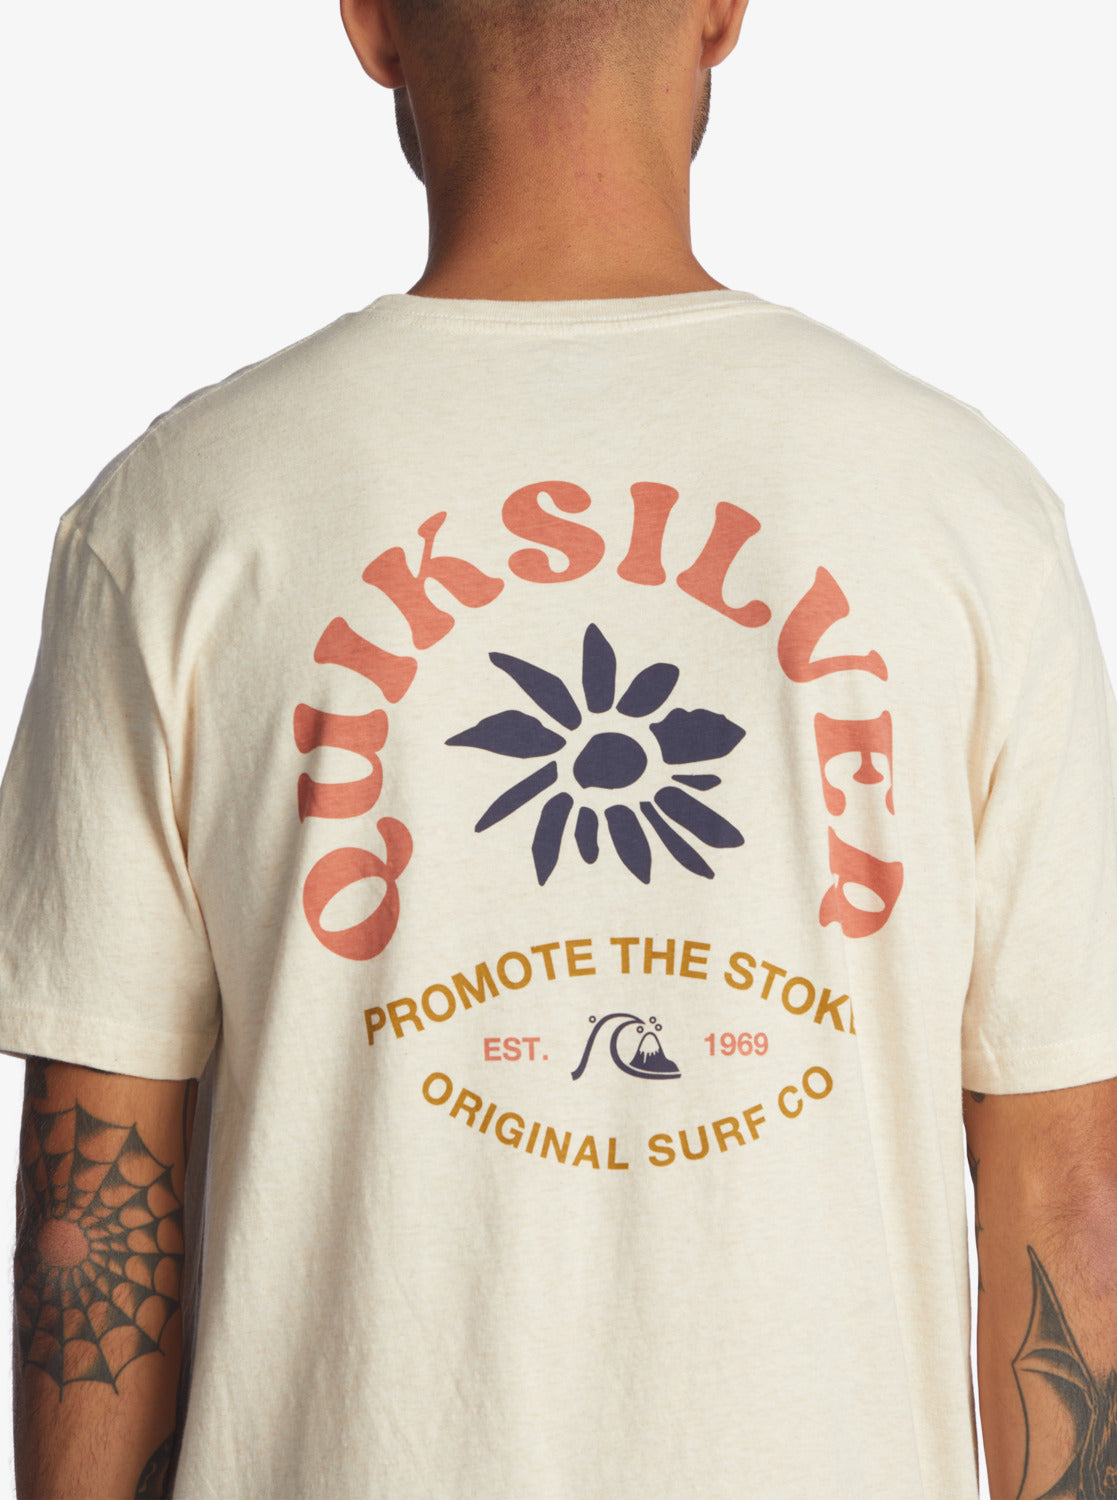 Quiksilver Simple Script T-shirt - Promote the Stoke Tees